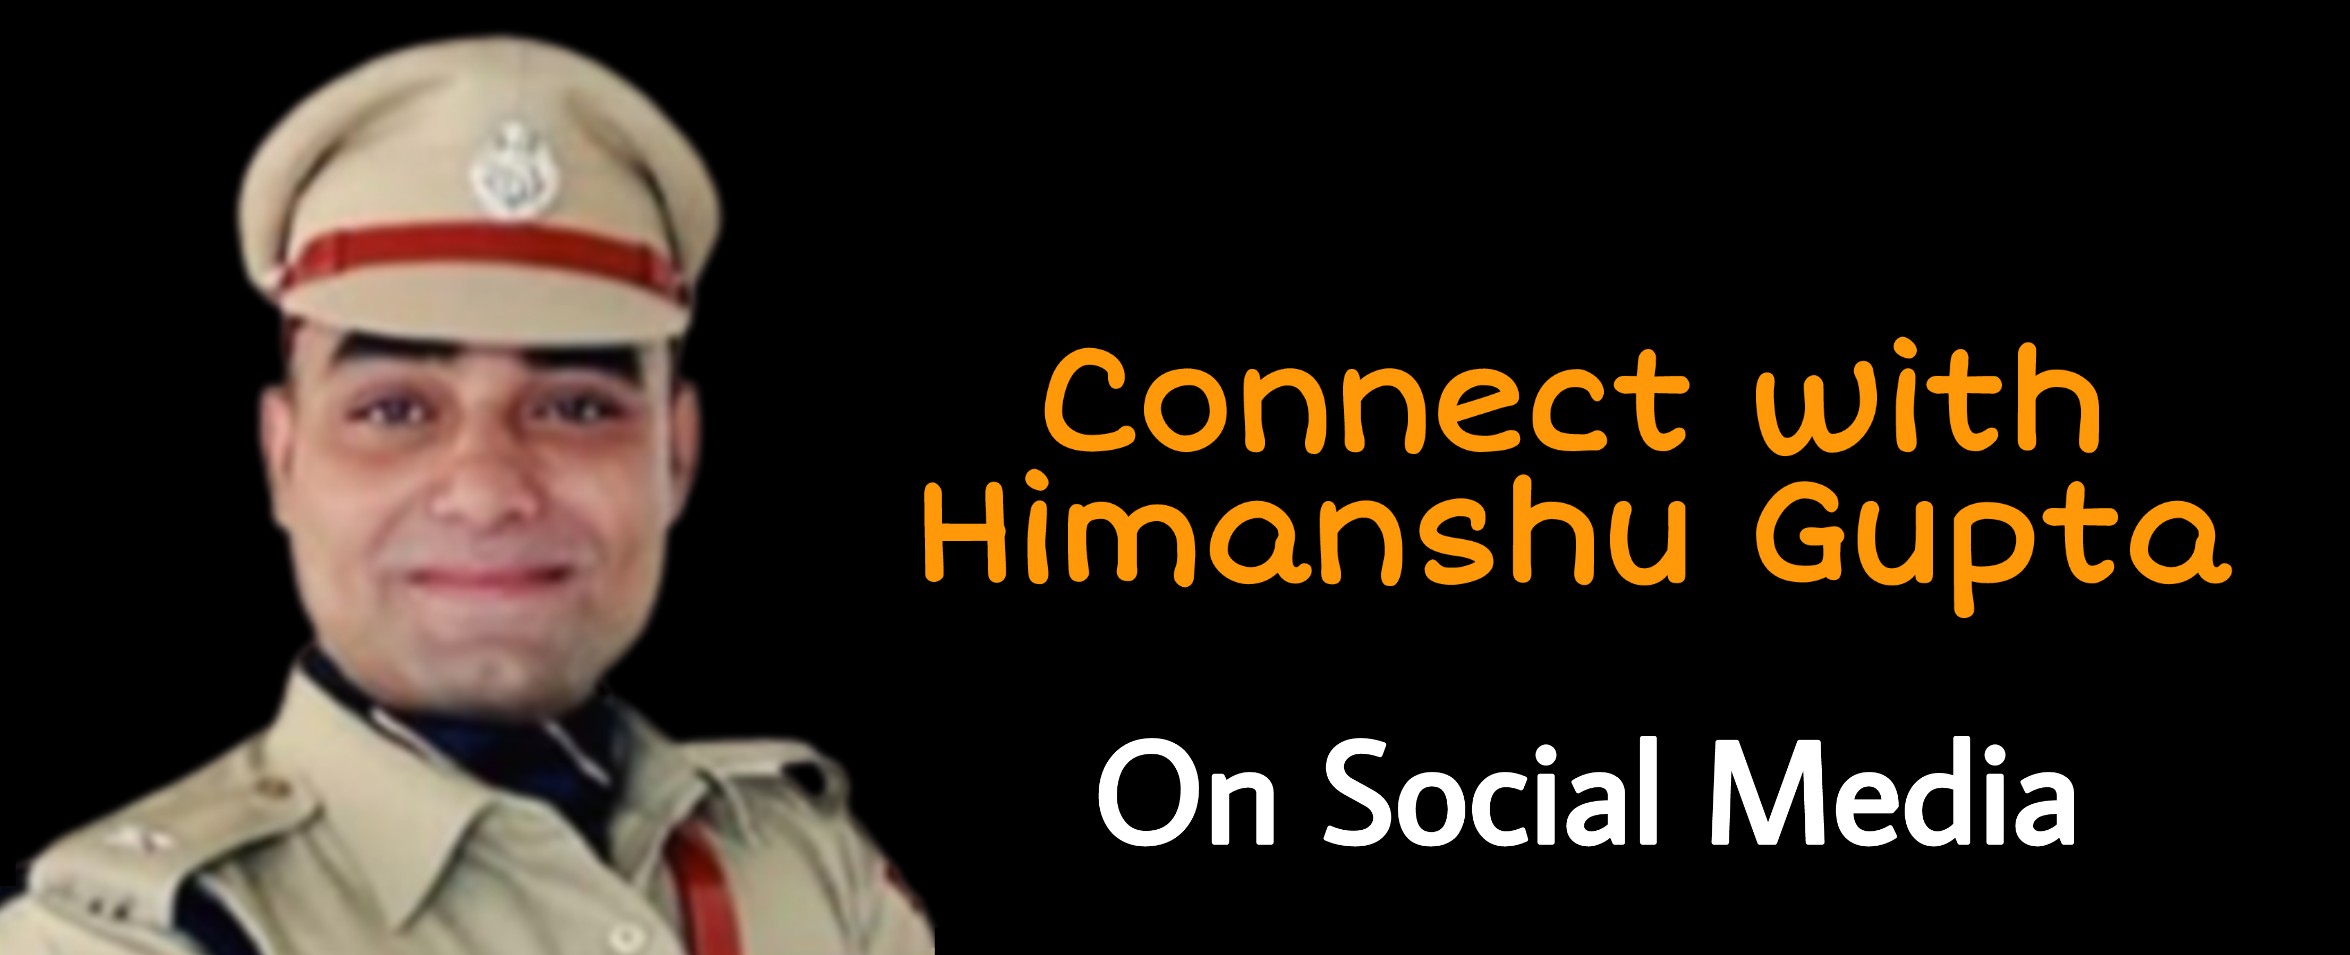 Follow Himanshu Gupta on social media and follow hmaratalent and its founder Ahbab zameer. who is Himanshu gupta from Sirauli, Himanshu Gupta from hmaratalent, Himanshu gupta with Ahbab Zameer